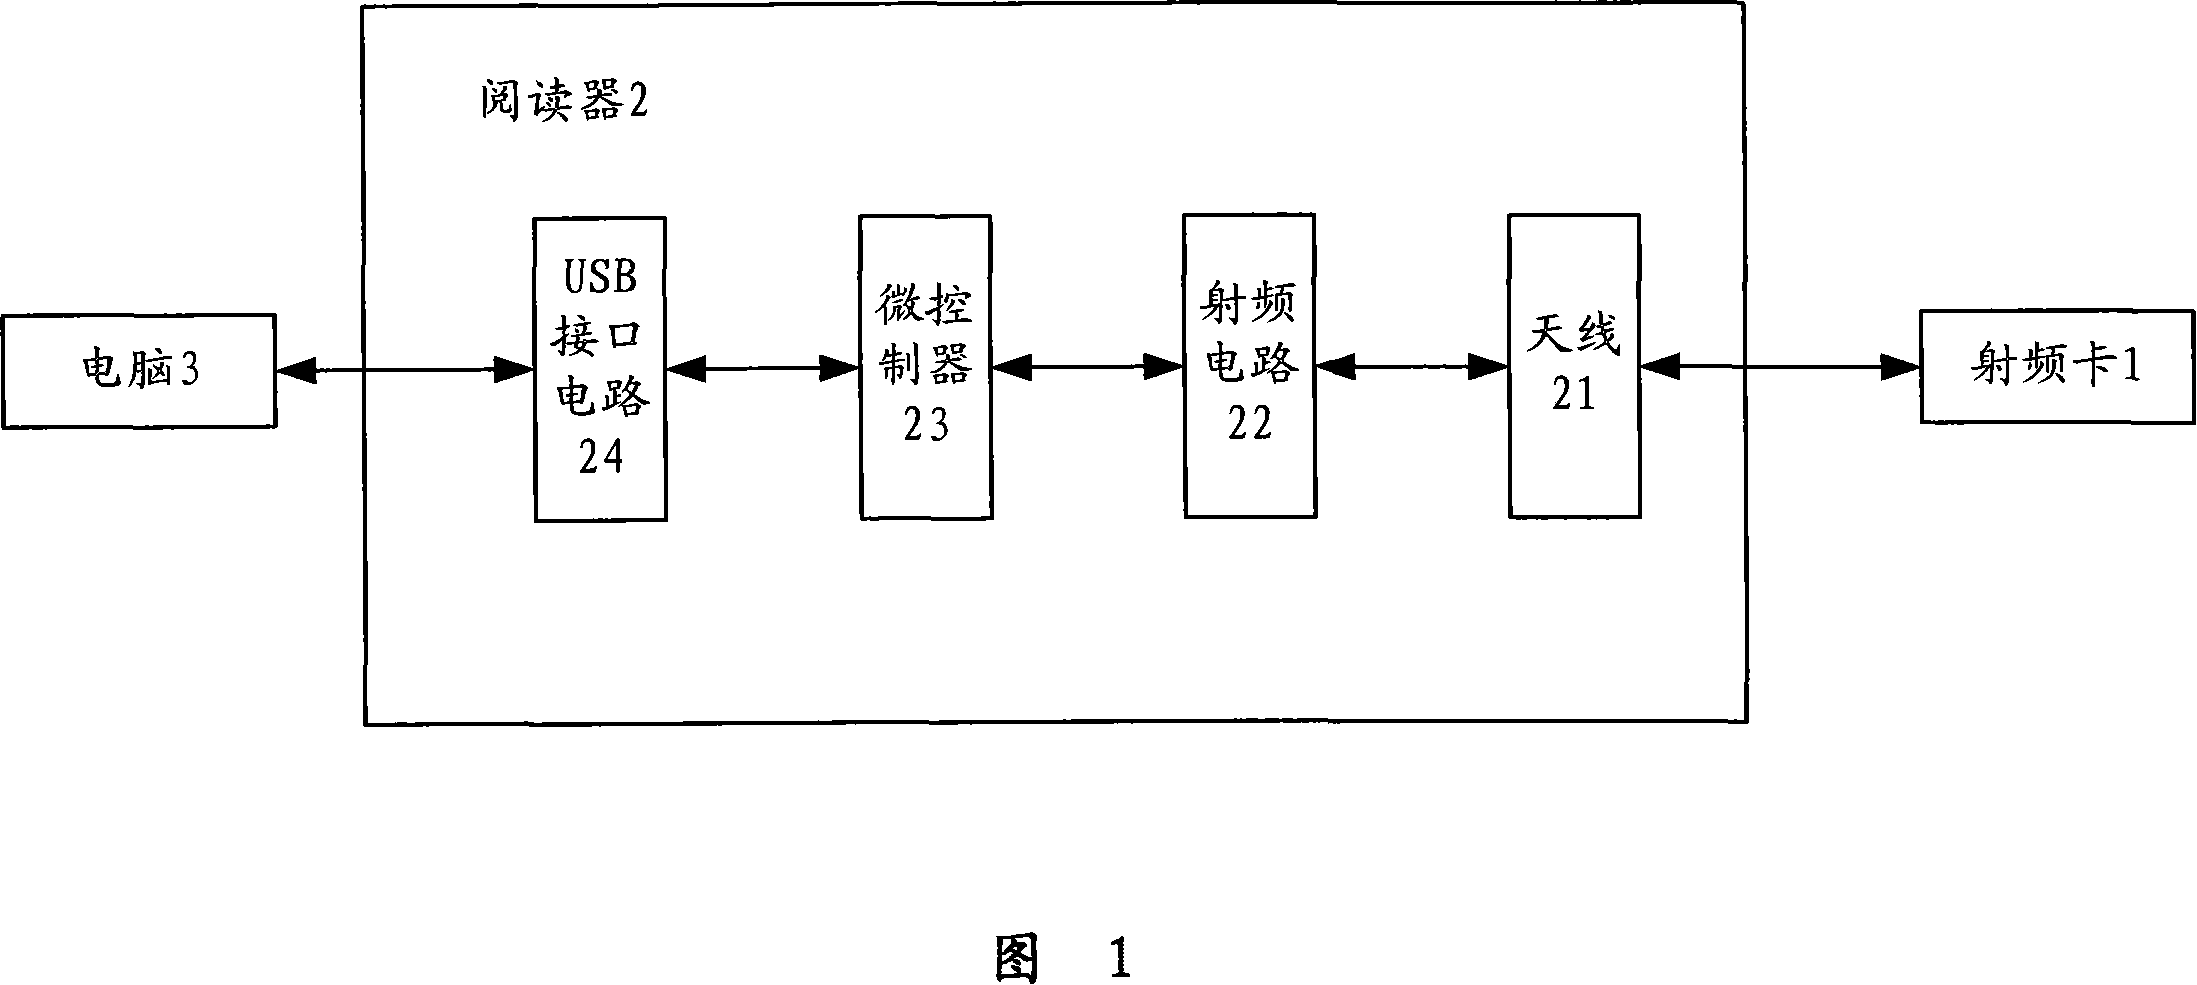 Radio frequency computer lock, computer locking and unlocking method